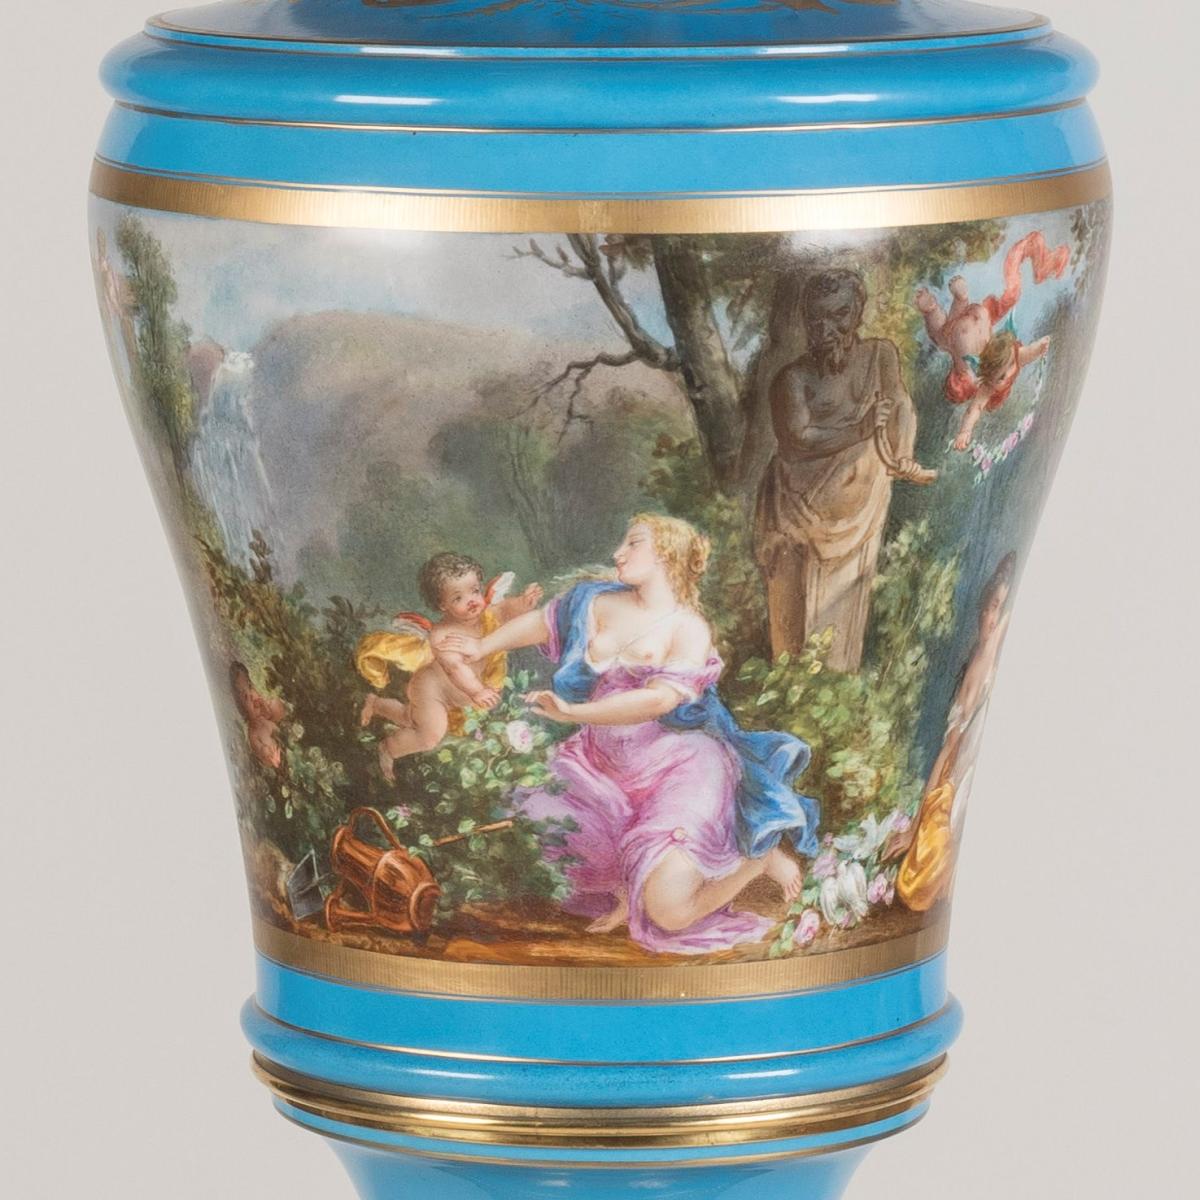 A Large and Impressive Sèvres Style Porcelain Vase